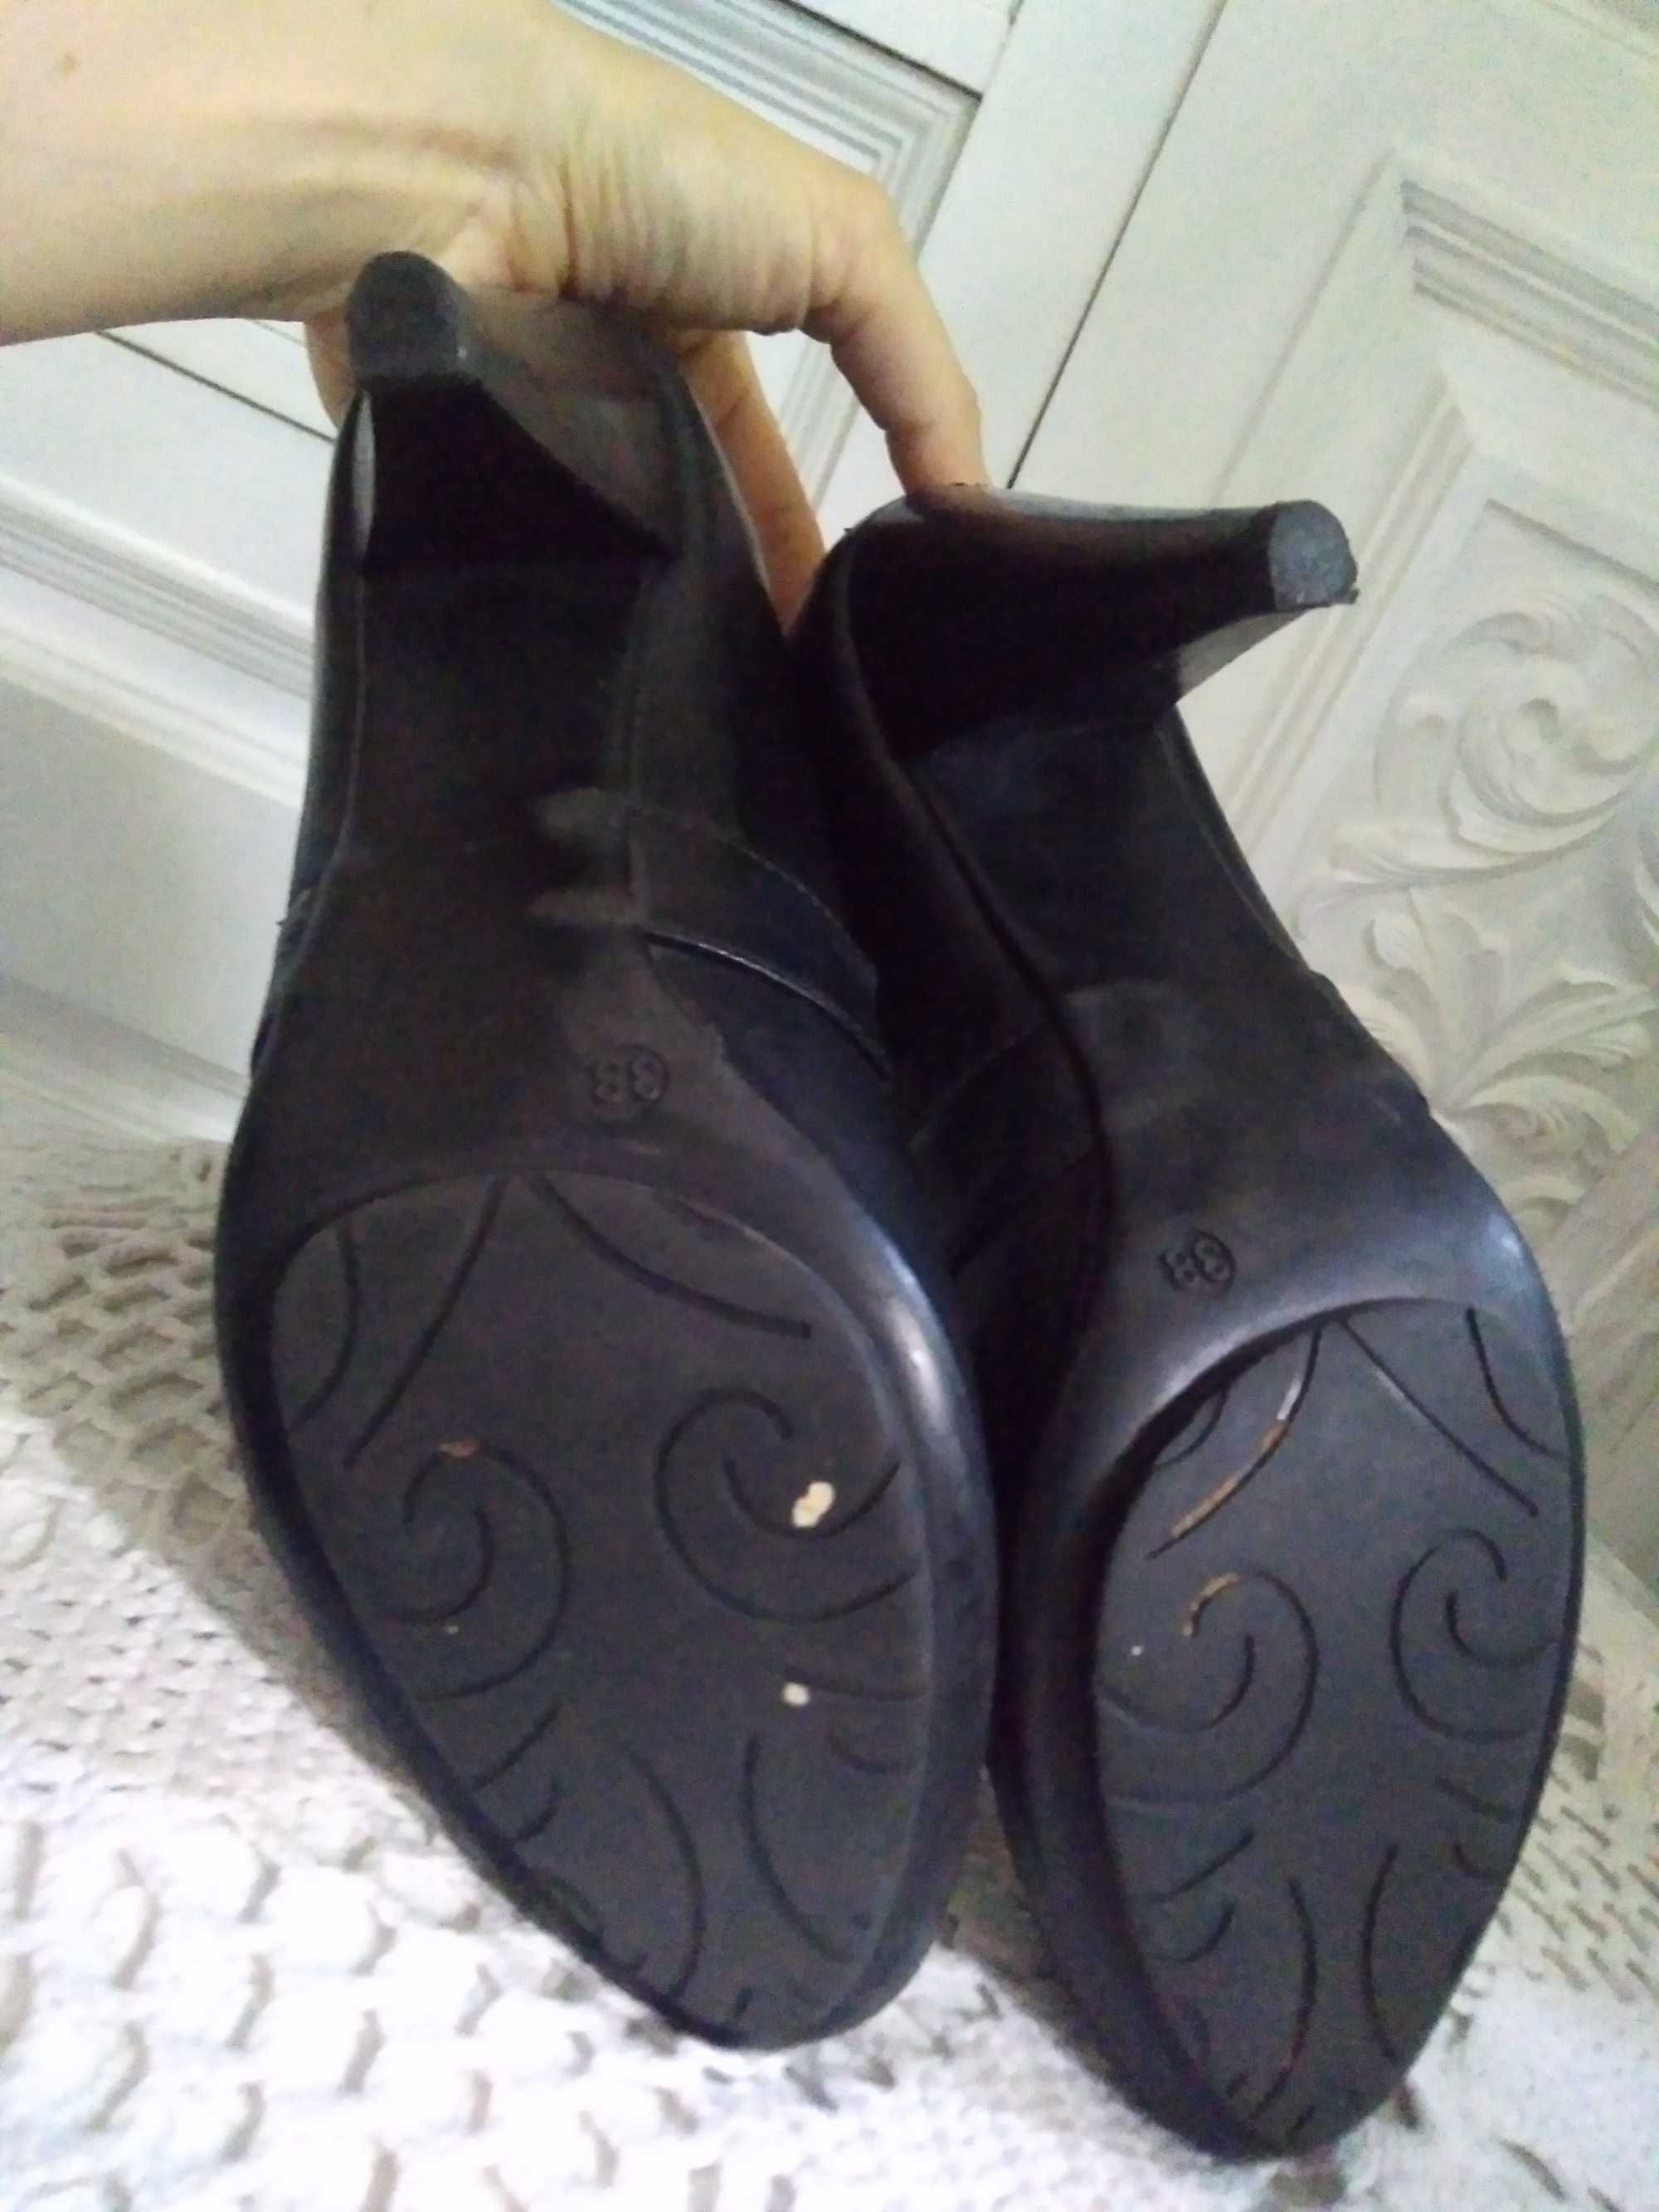 Skórzane półbuty czółenka damskie buty pantofle na obcasie rozmiar 38